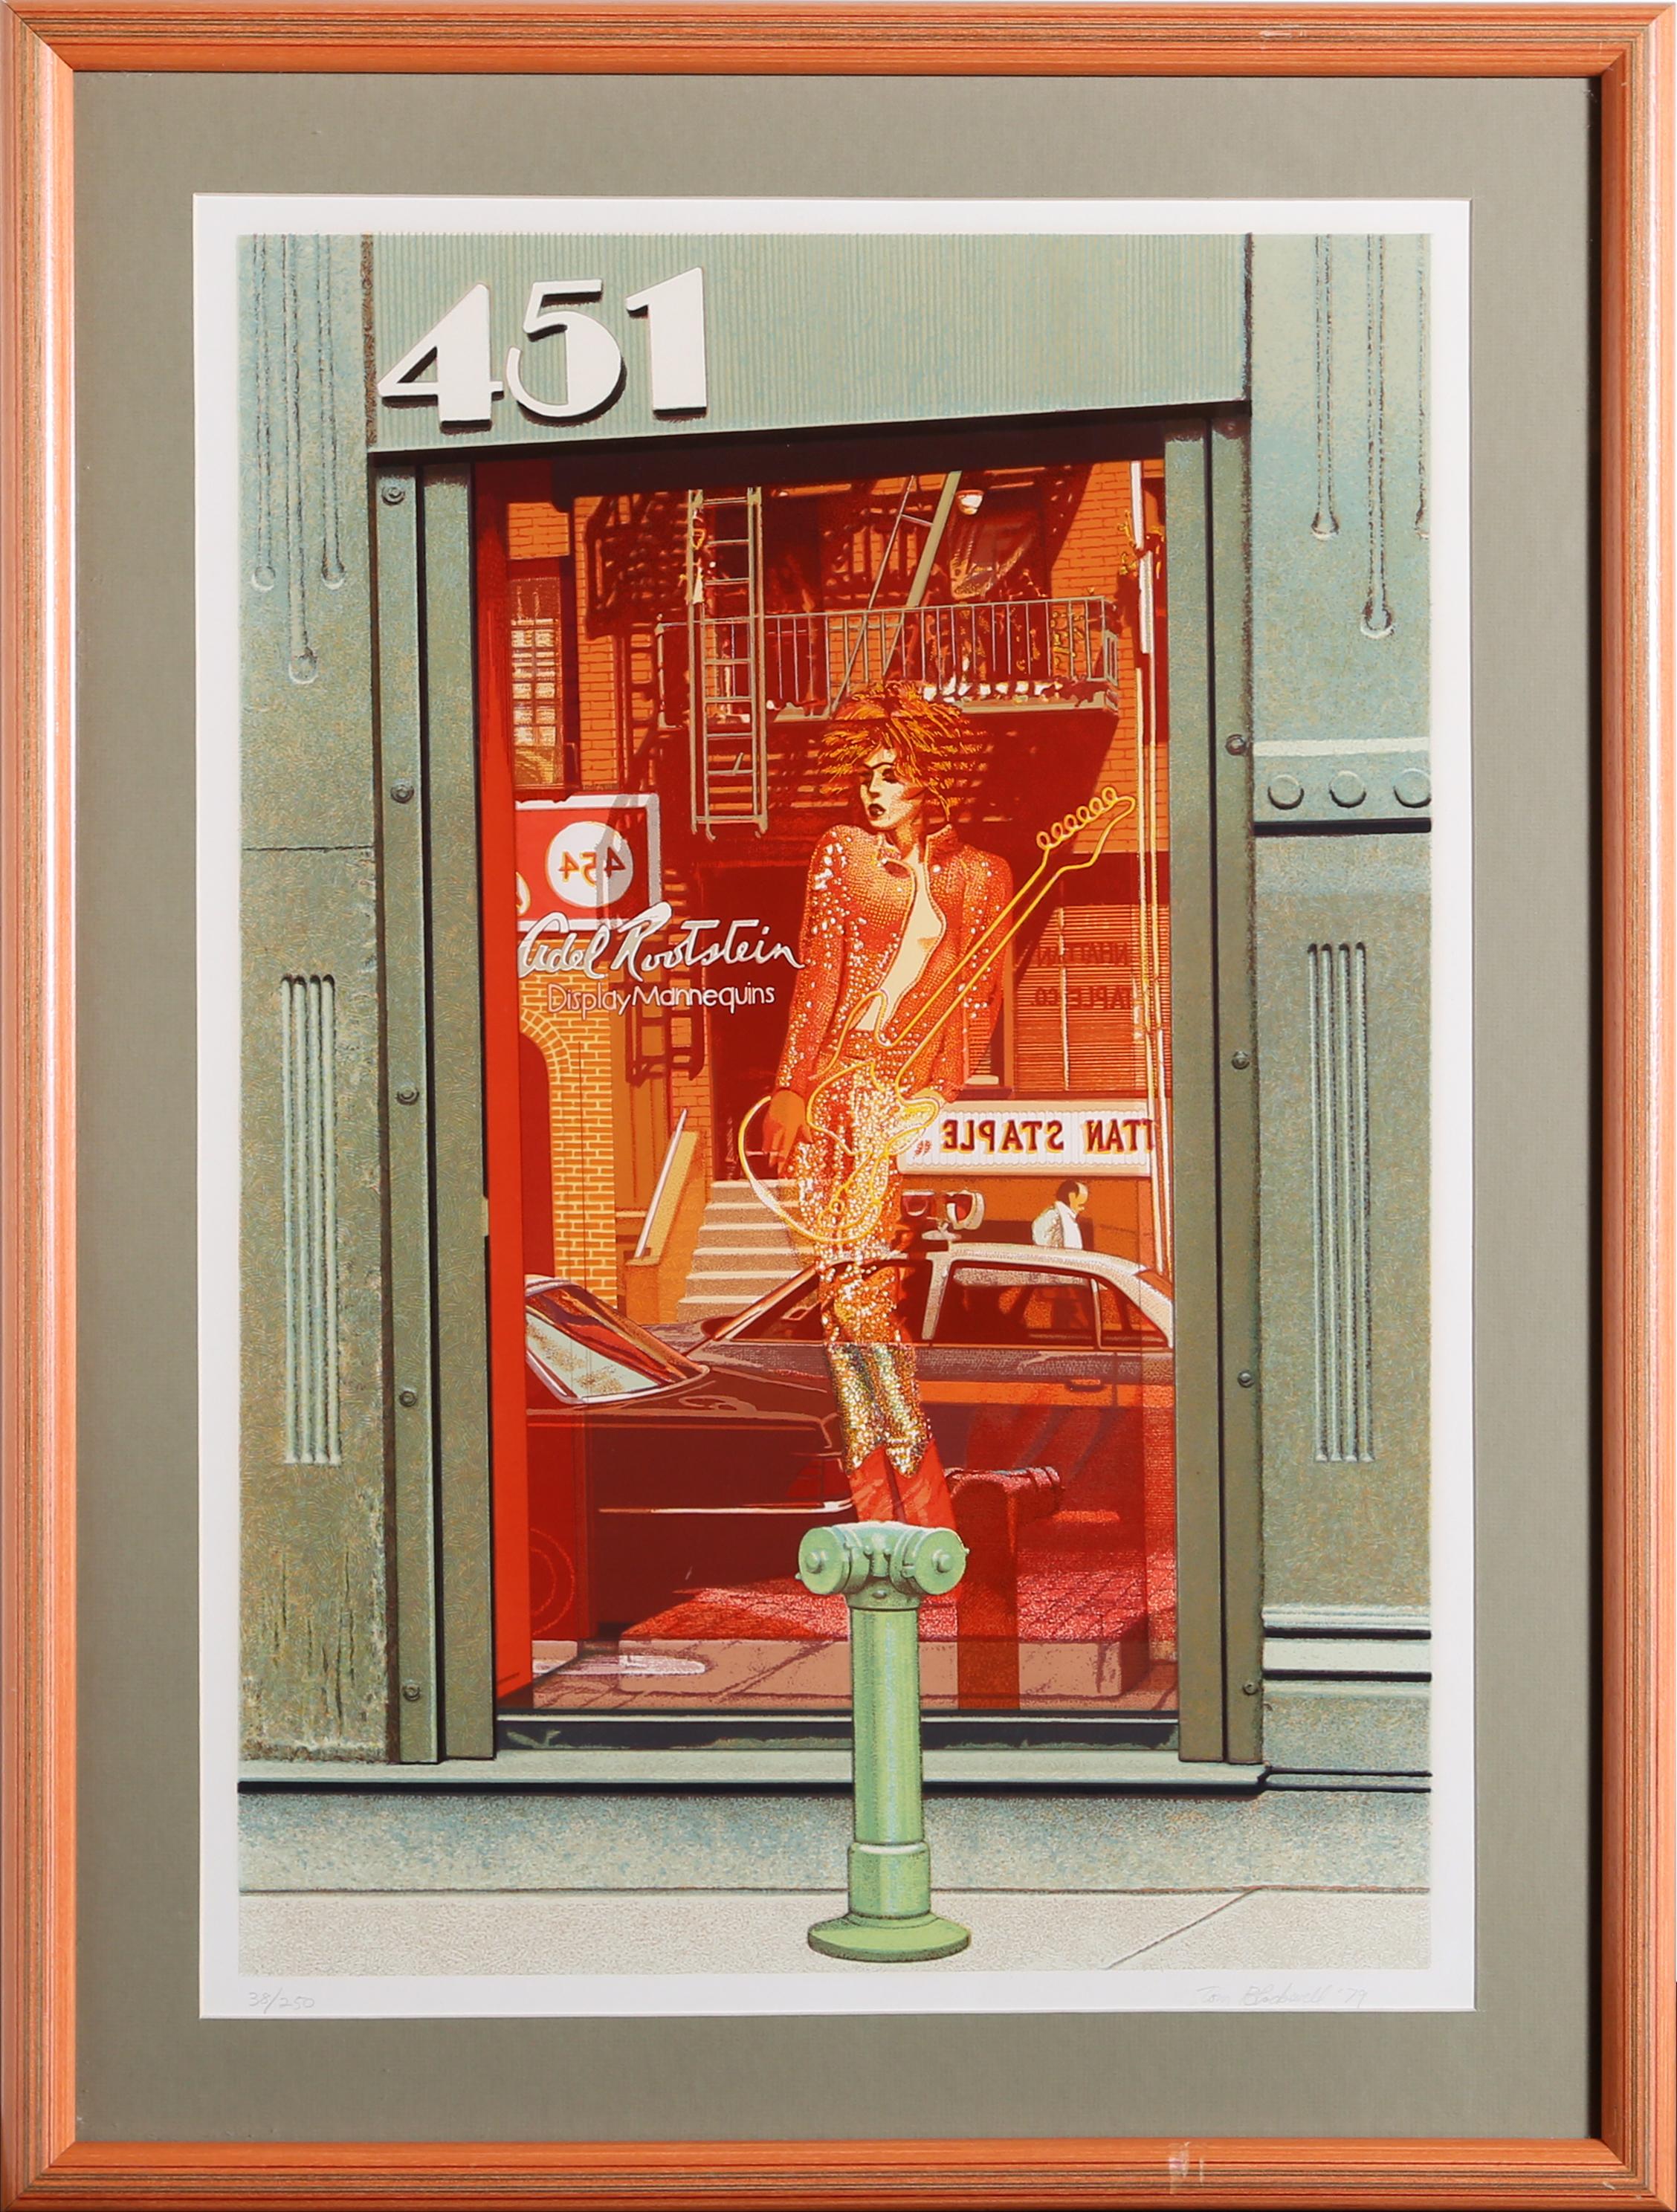 451 Store Window, Silkscreen by Tom Blackwell